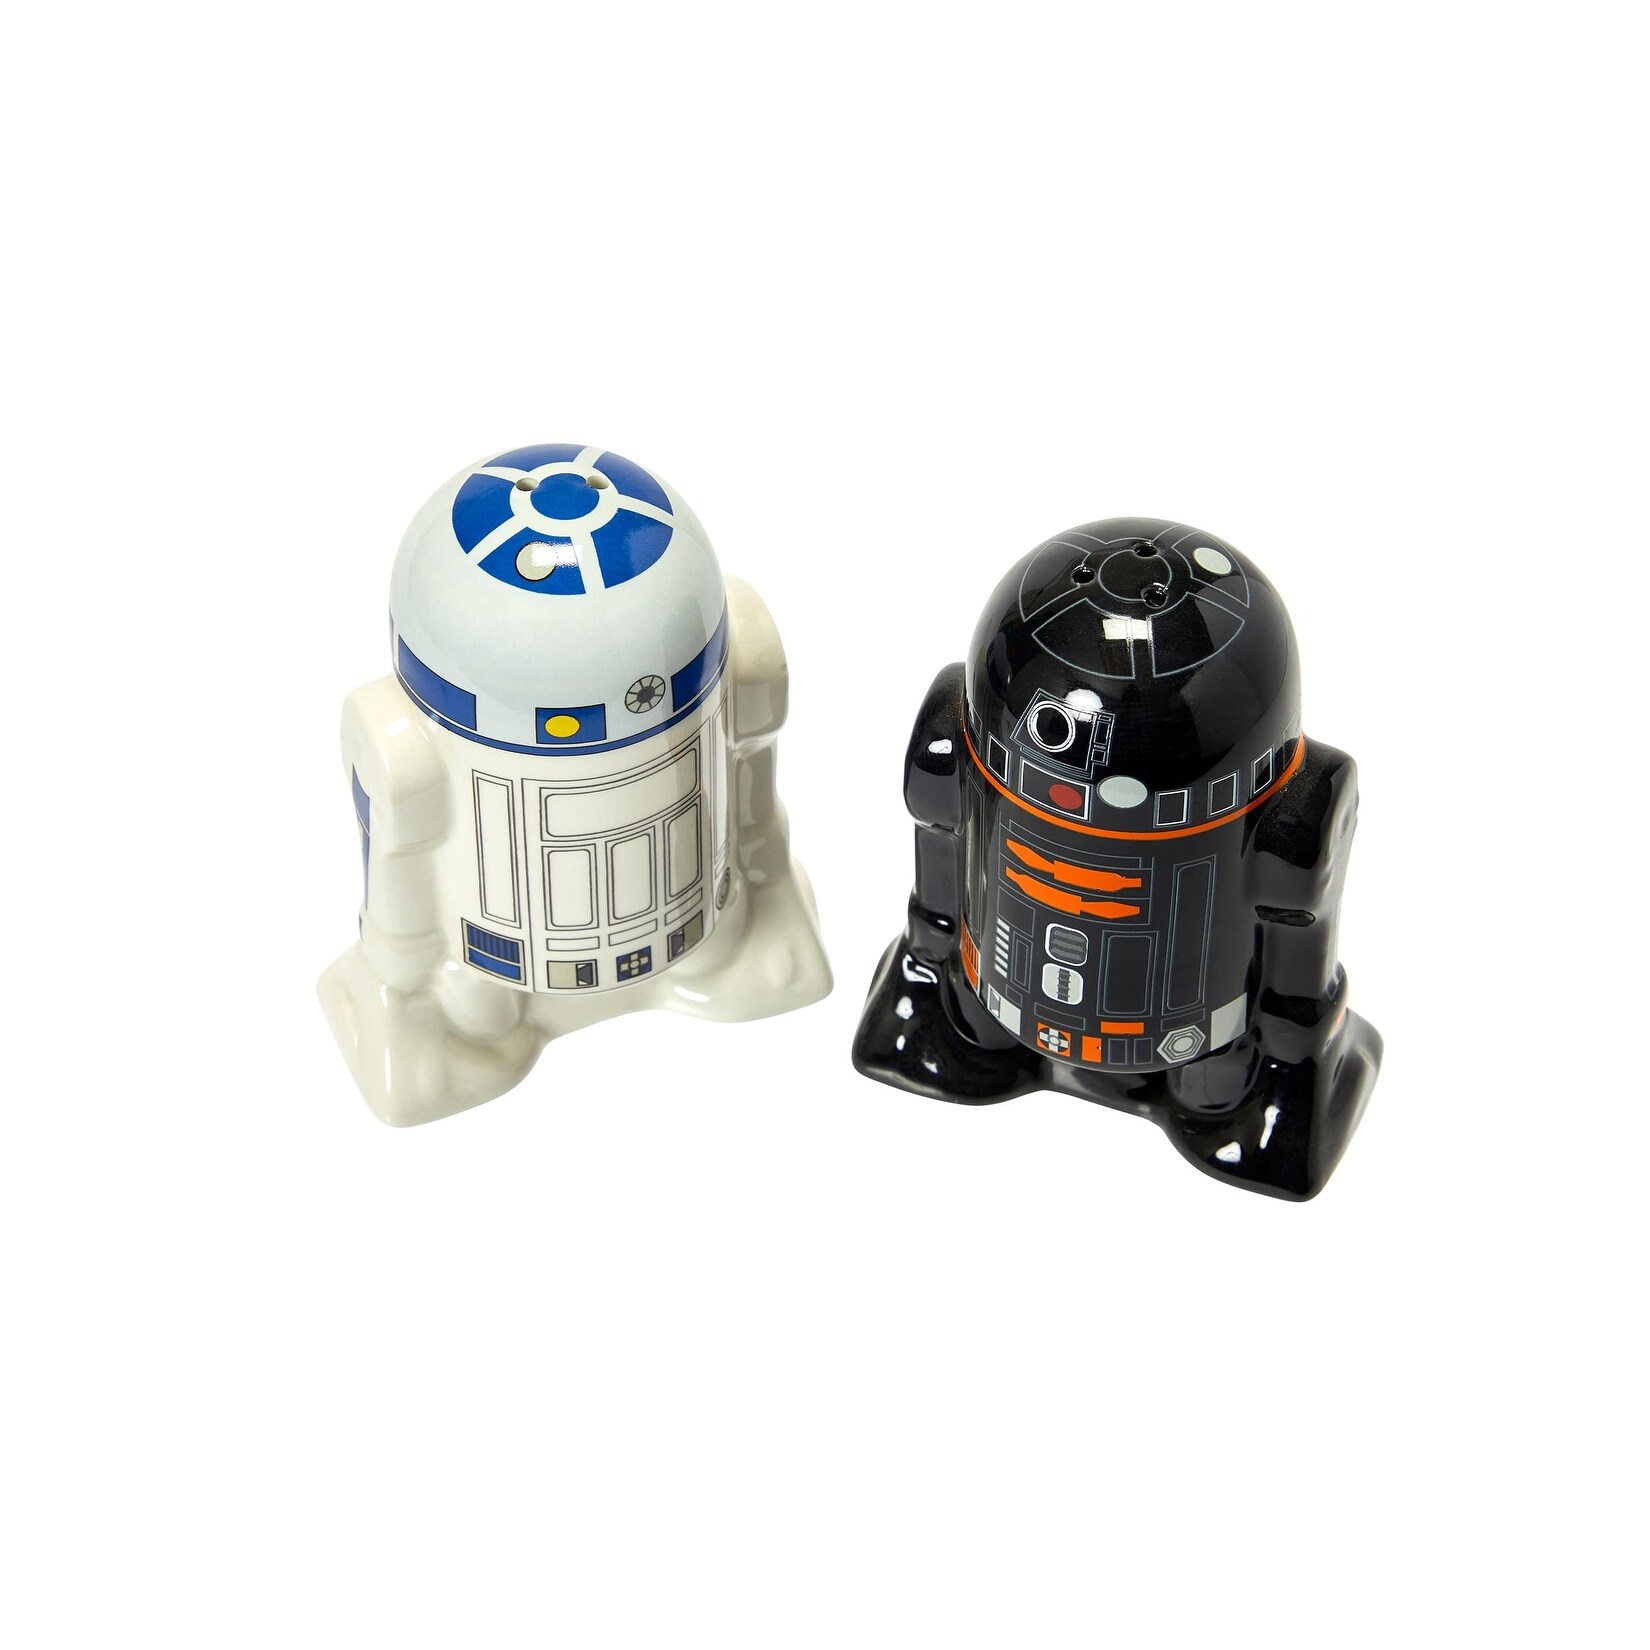 Star Wars Salt and Pepper Shaker Set - Ceramic C3PO and R2D2